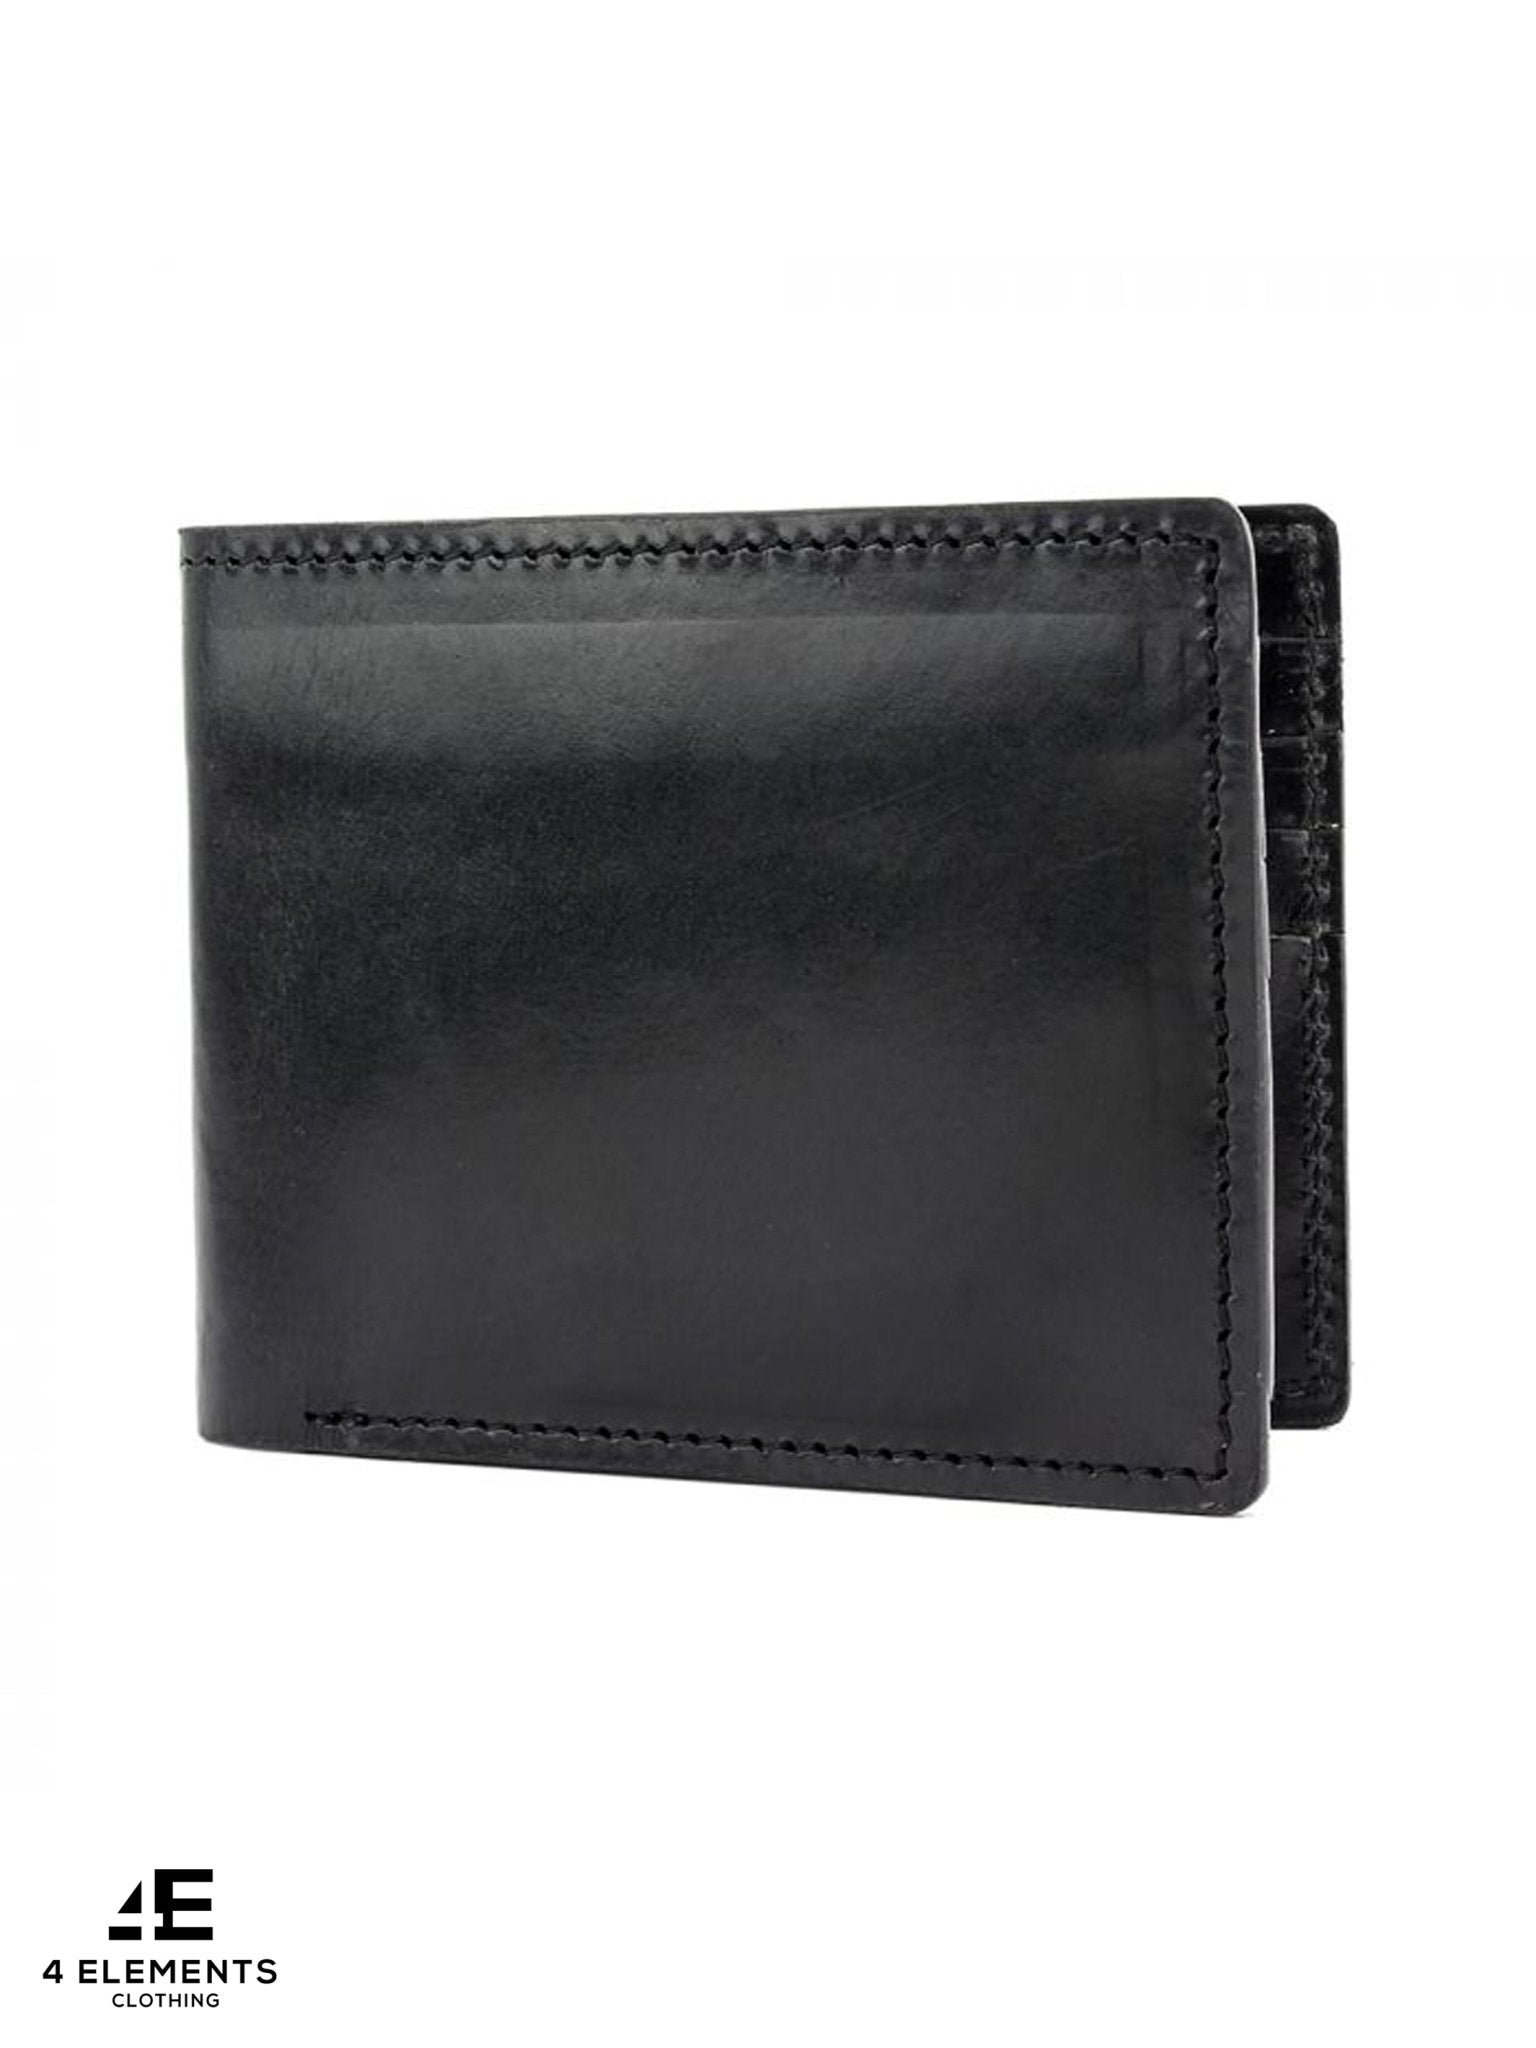 4elementsclothingThe British Bag CompanyThe British Bag Company - Black Glossy Leather WalletBag710035